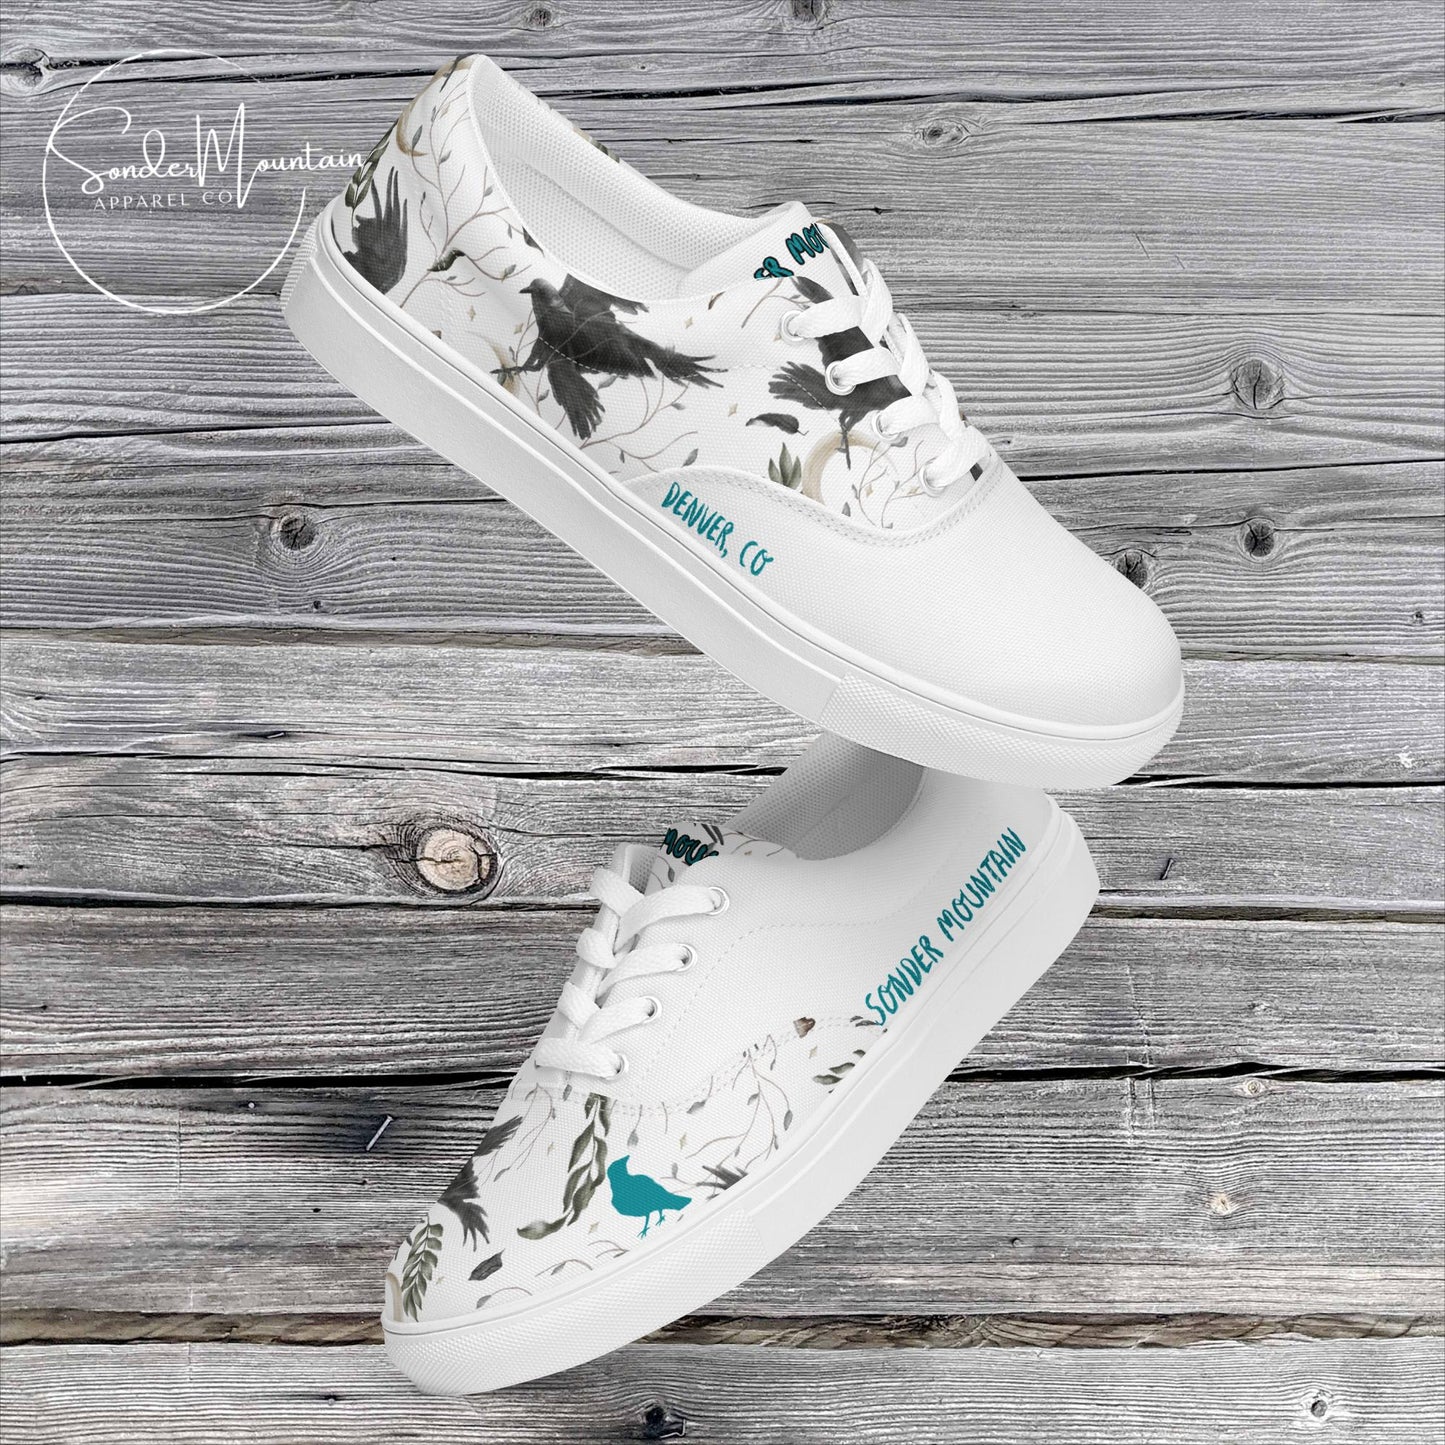 The White Crow - Men’s lace-up canvas shoes